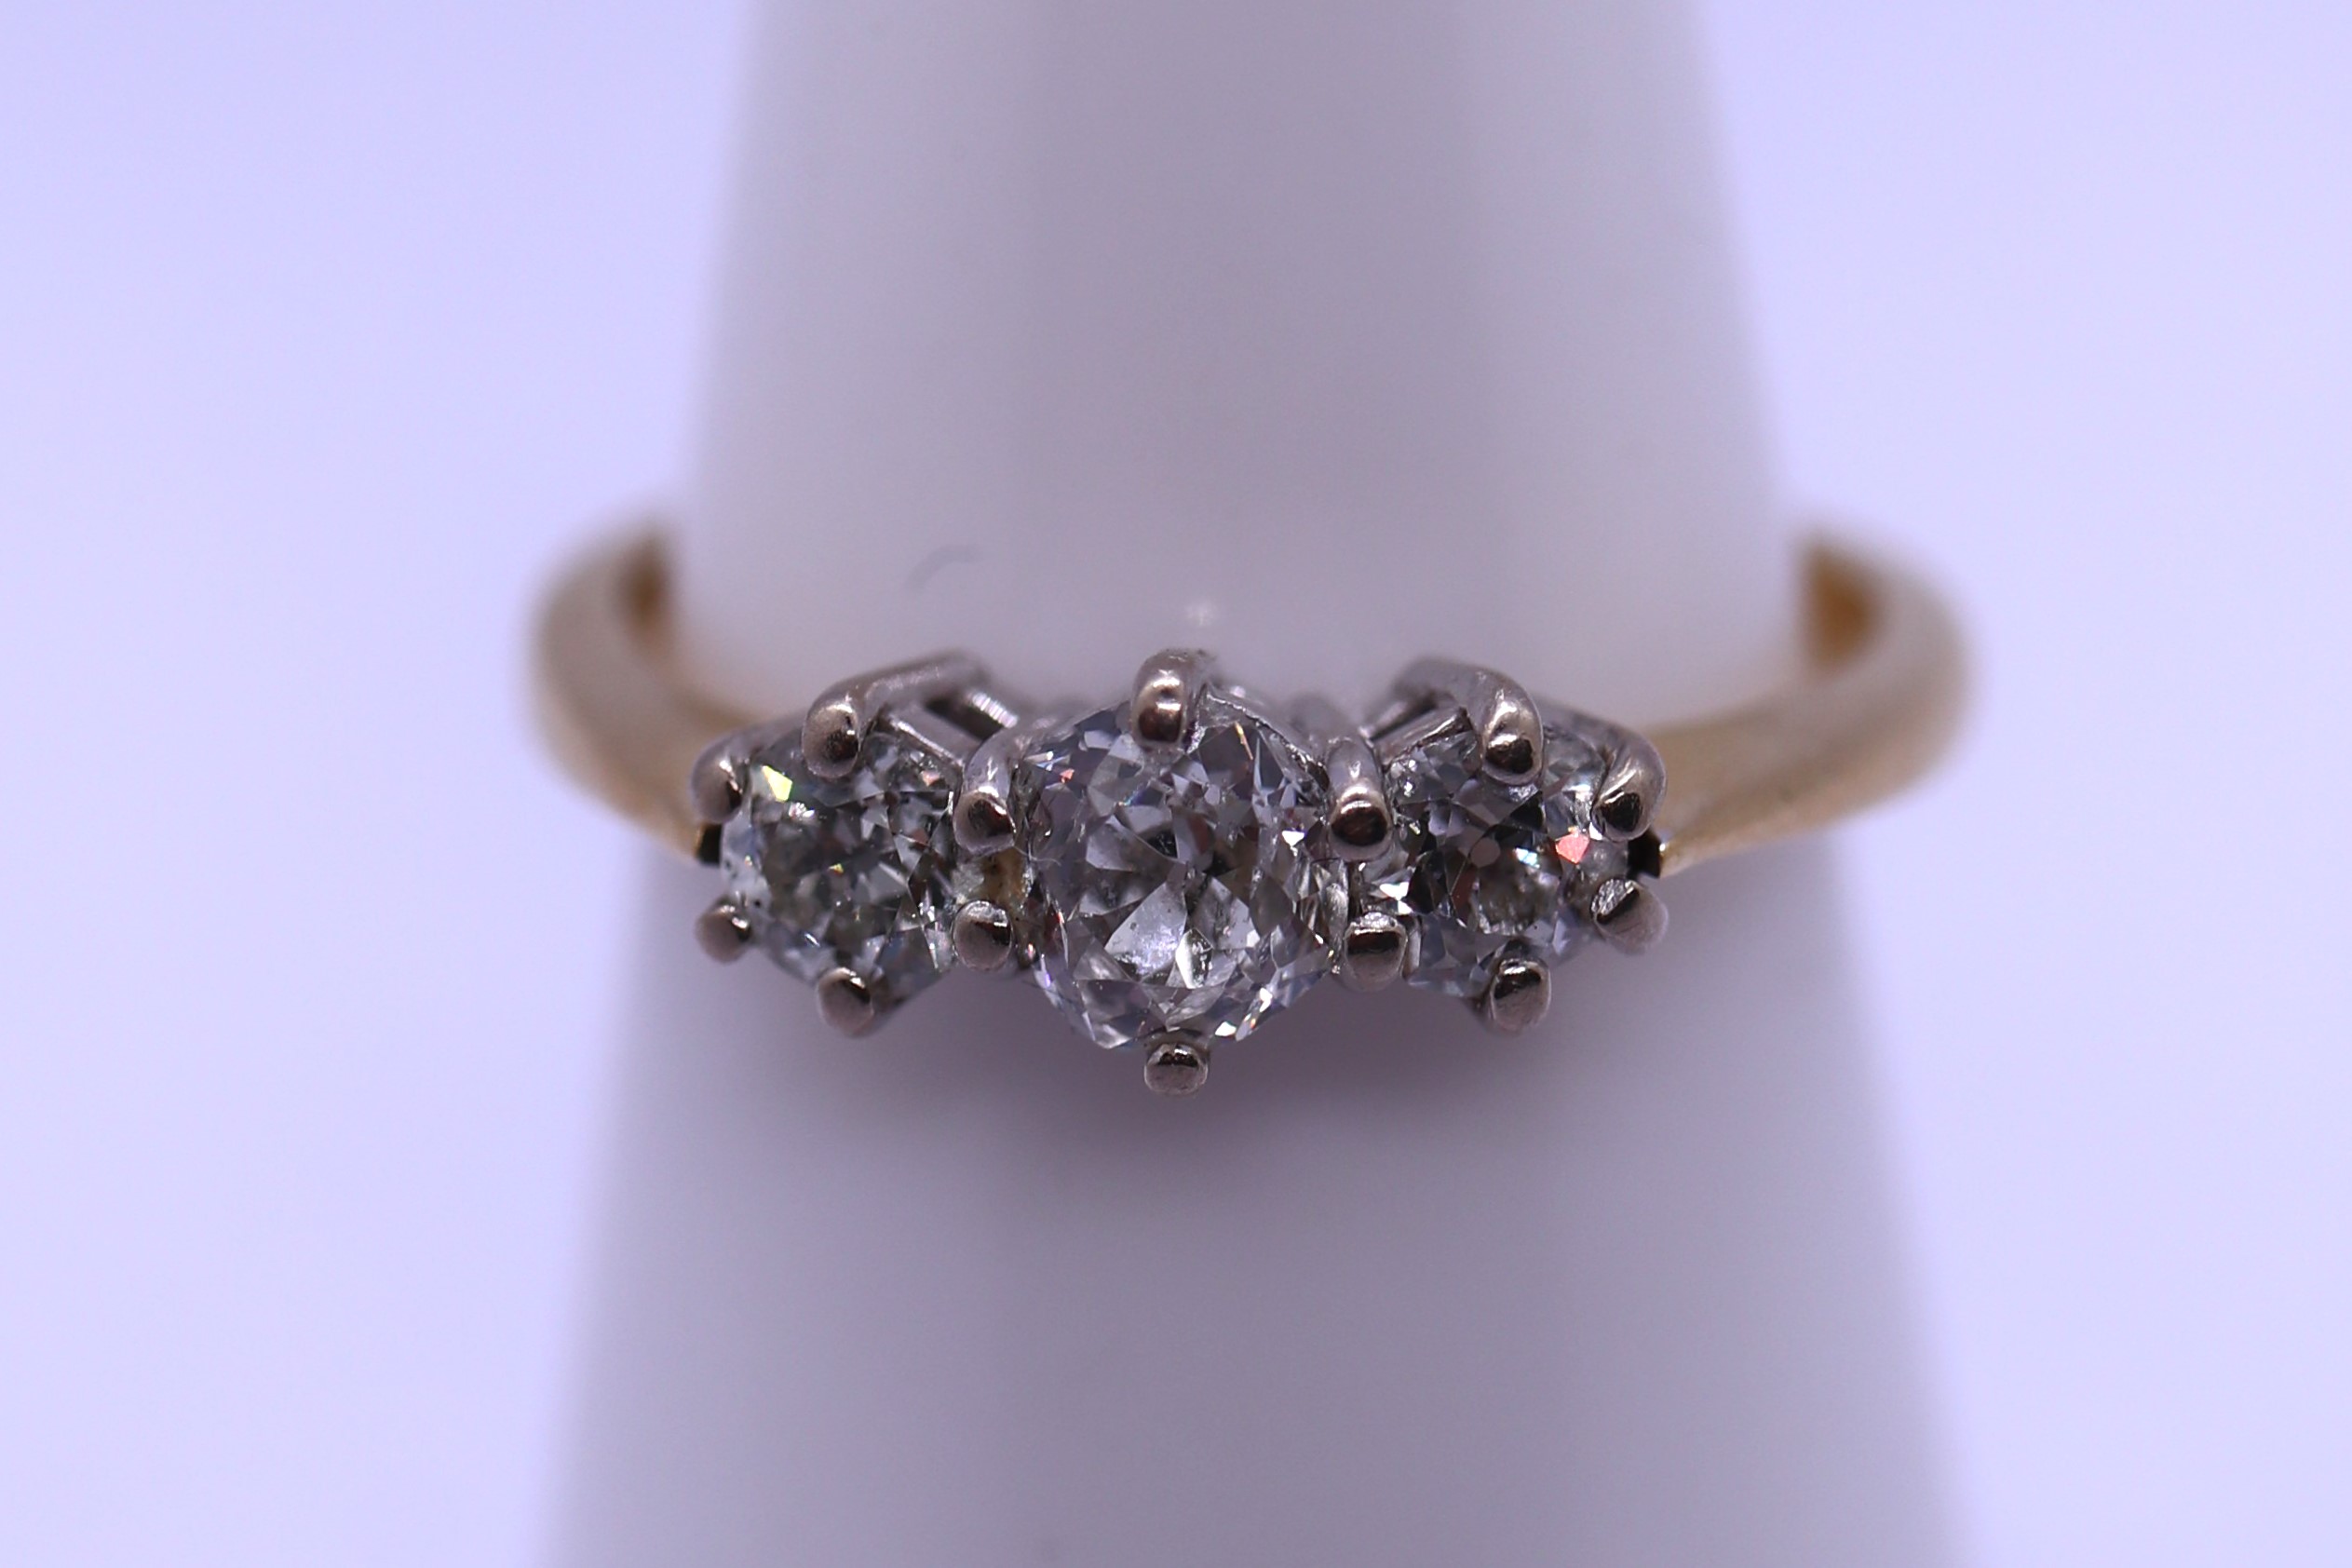 18ct gold platinum set 3 stone diamond ring - Size L - Image 3 of 3